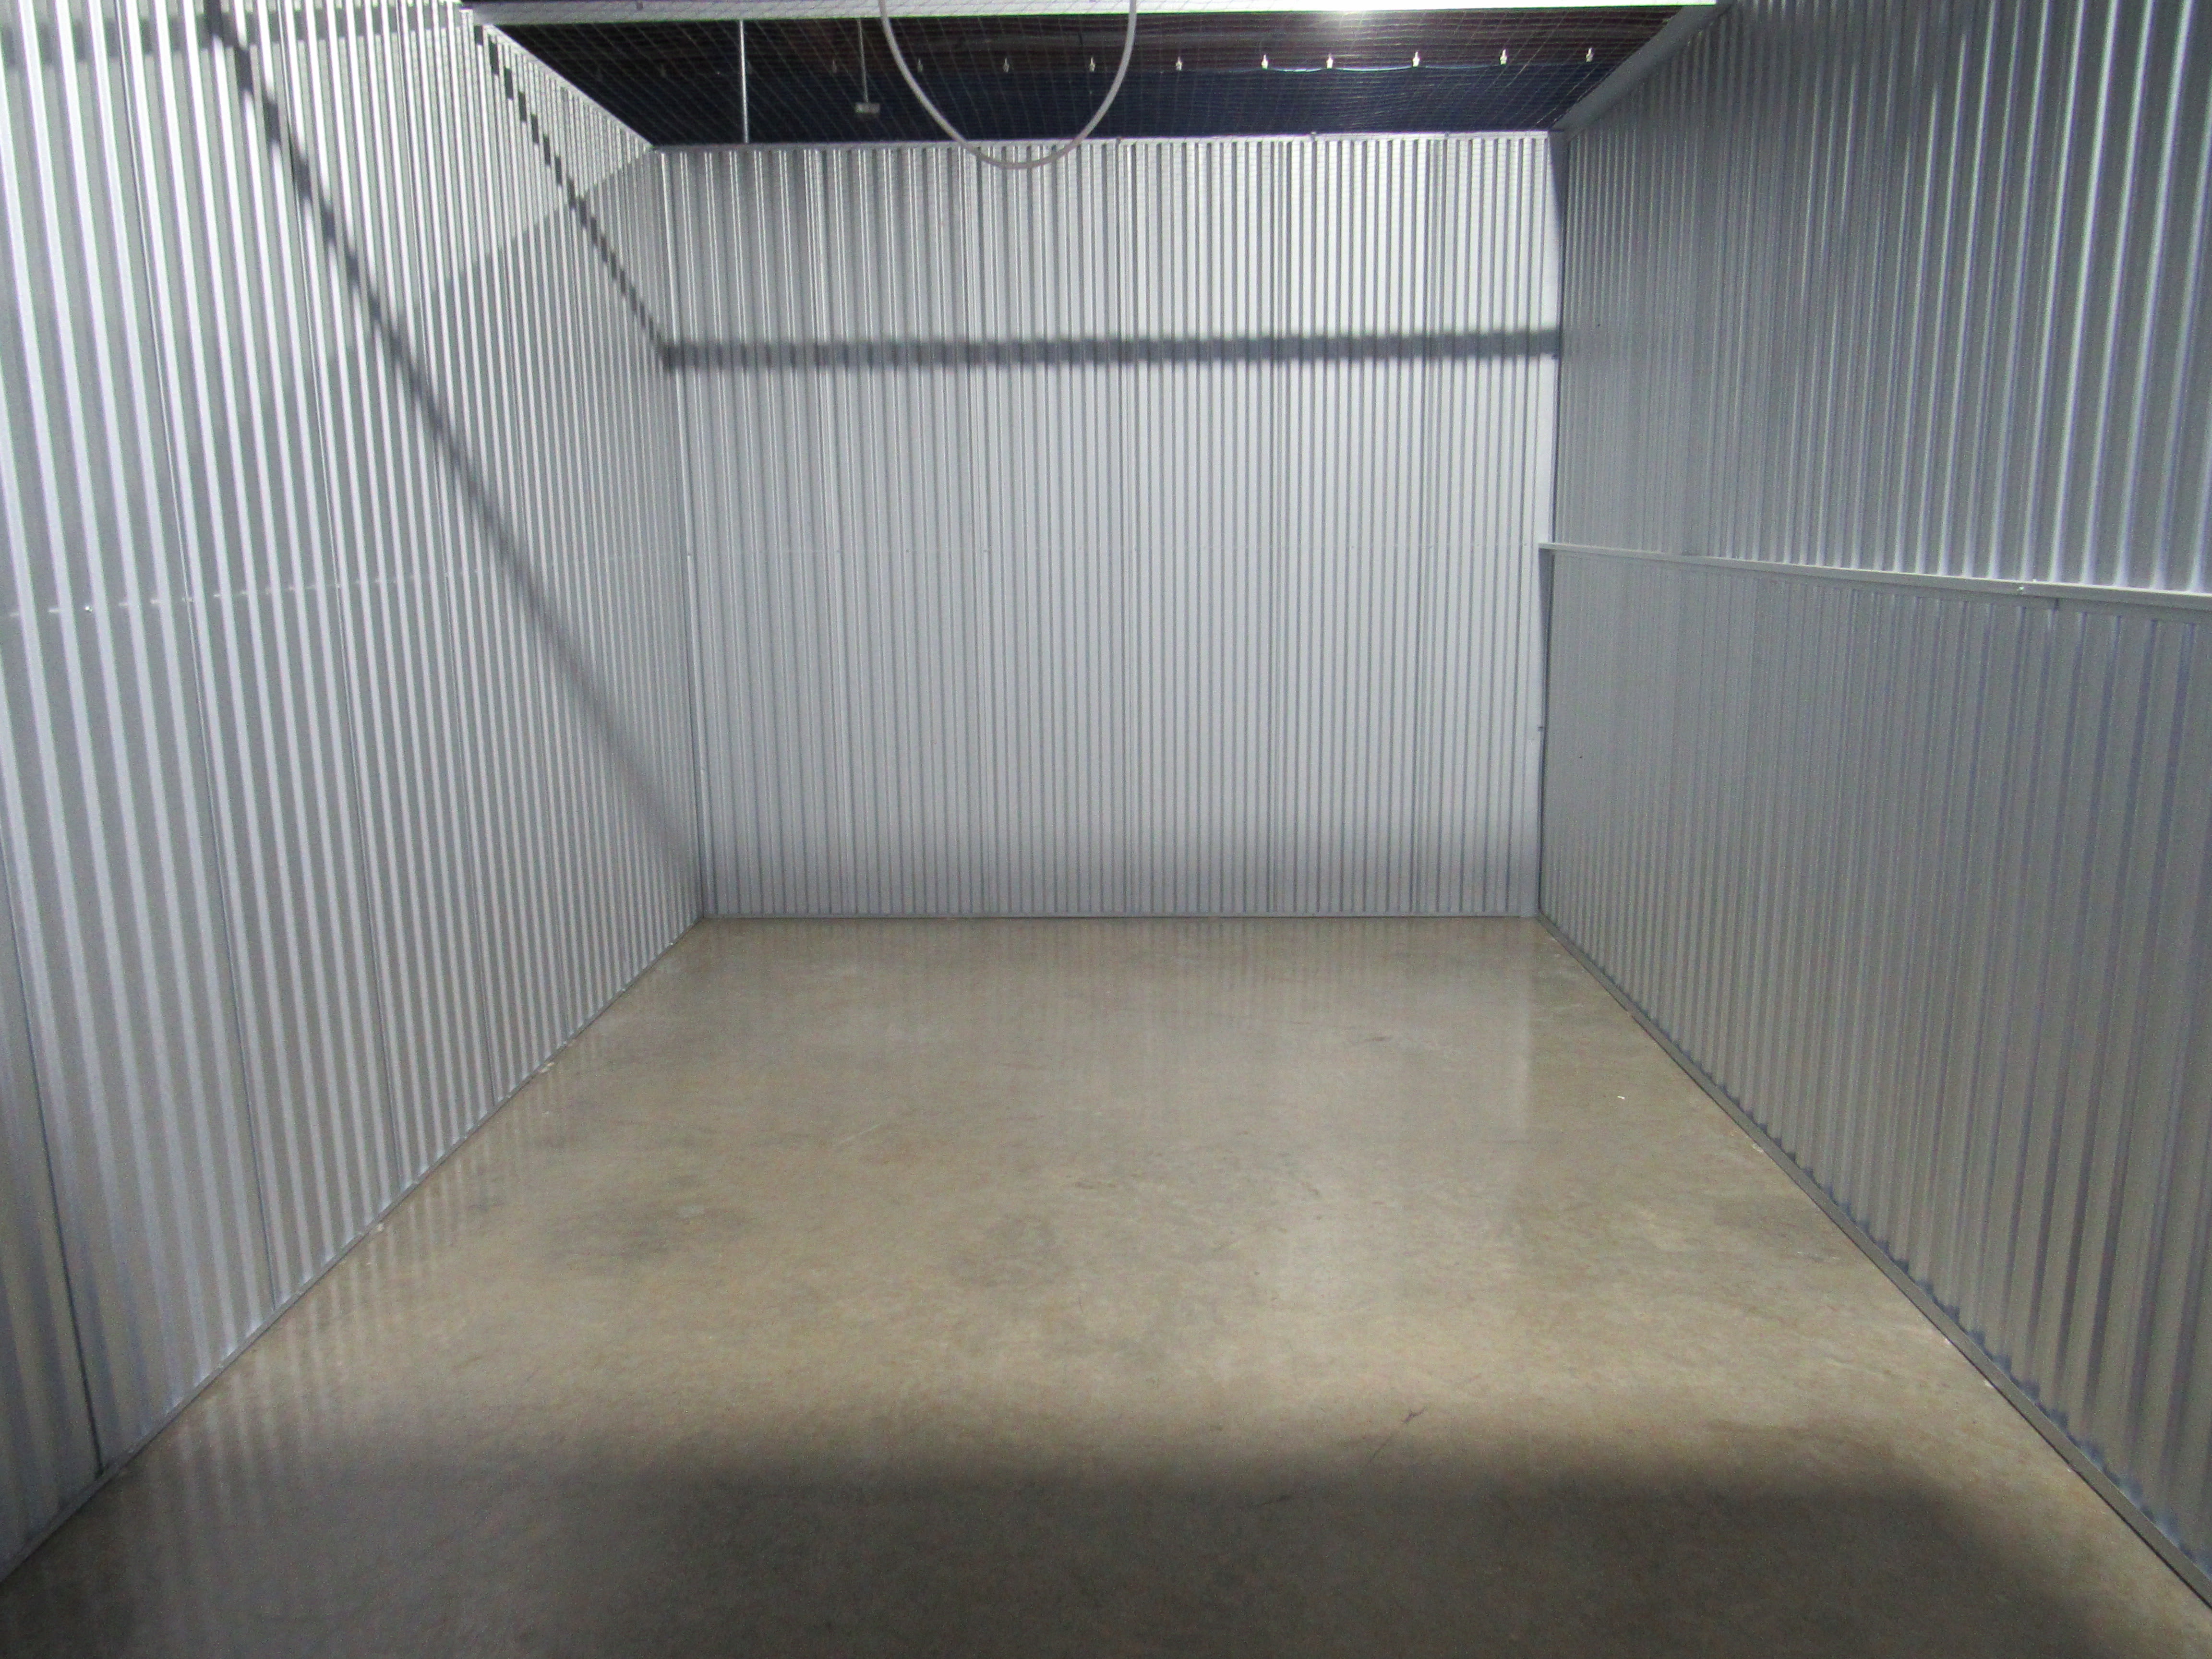 A storage unit at KO Storage in Ozark, Missouri